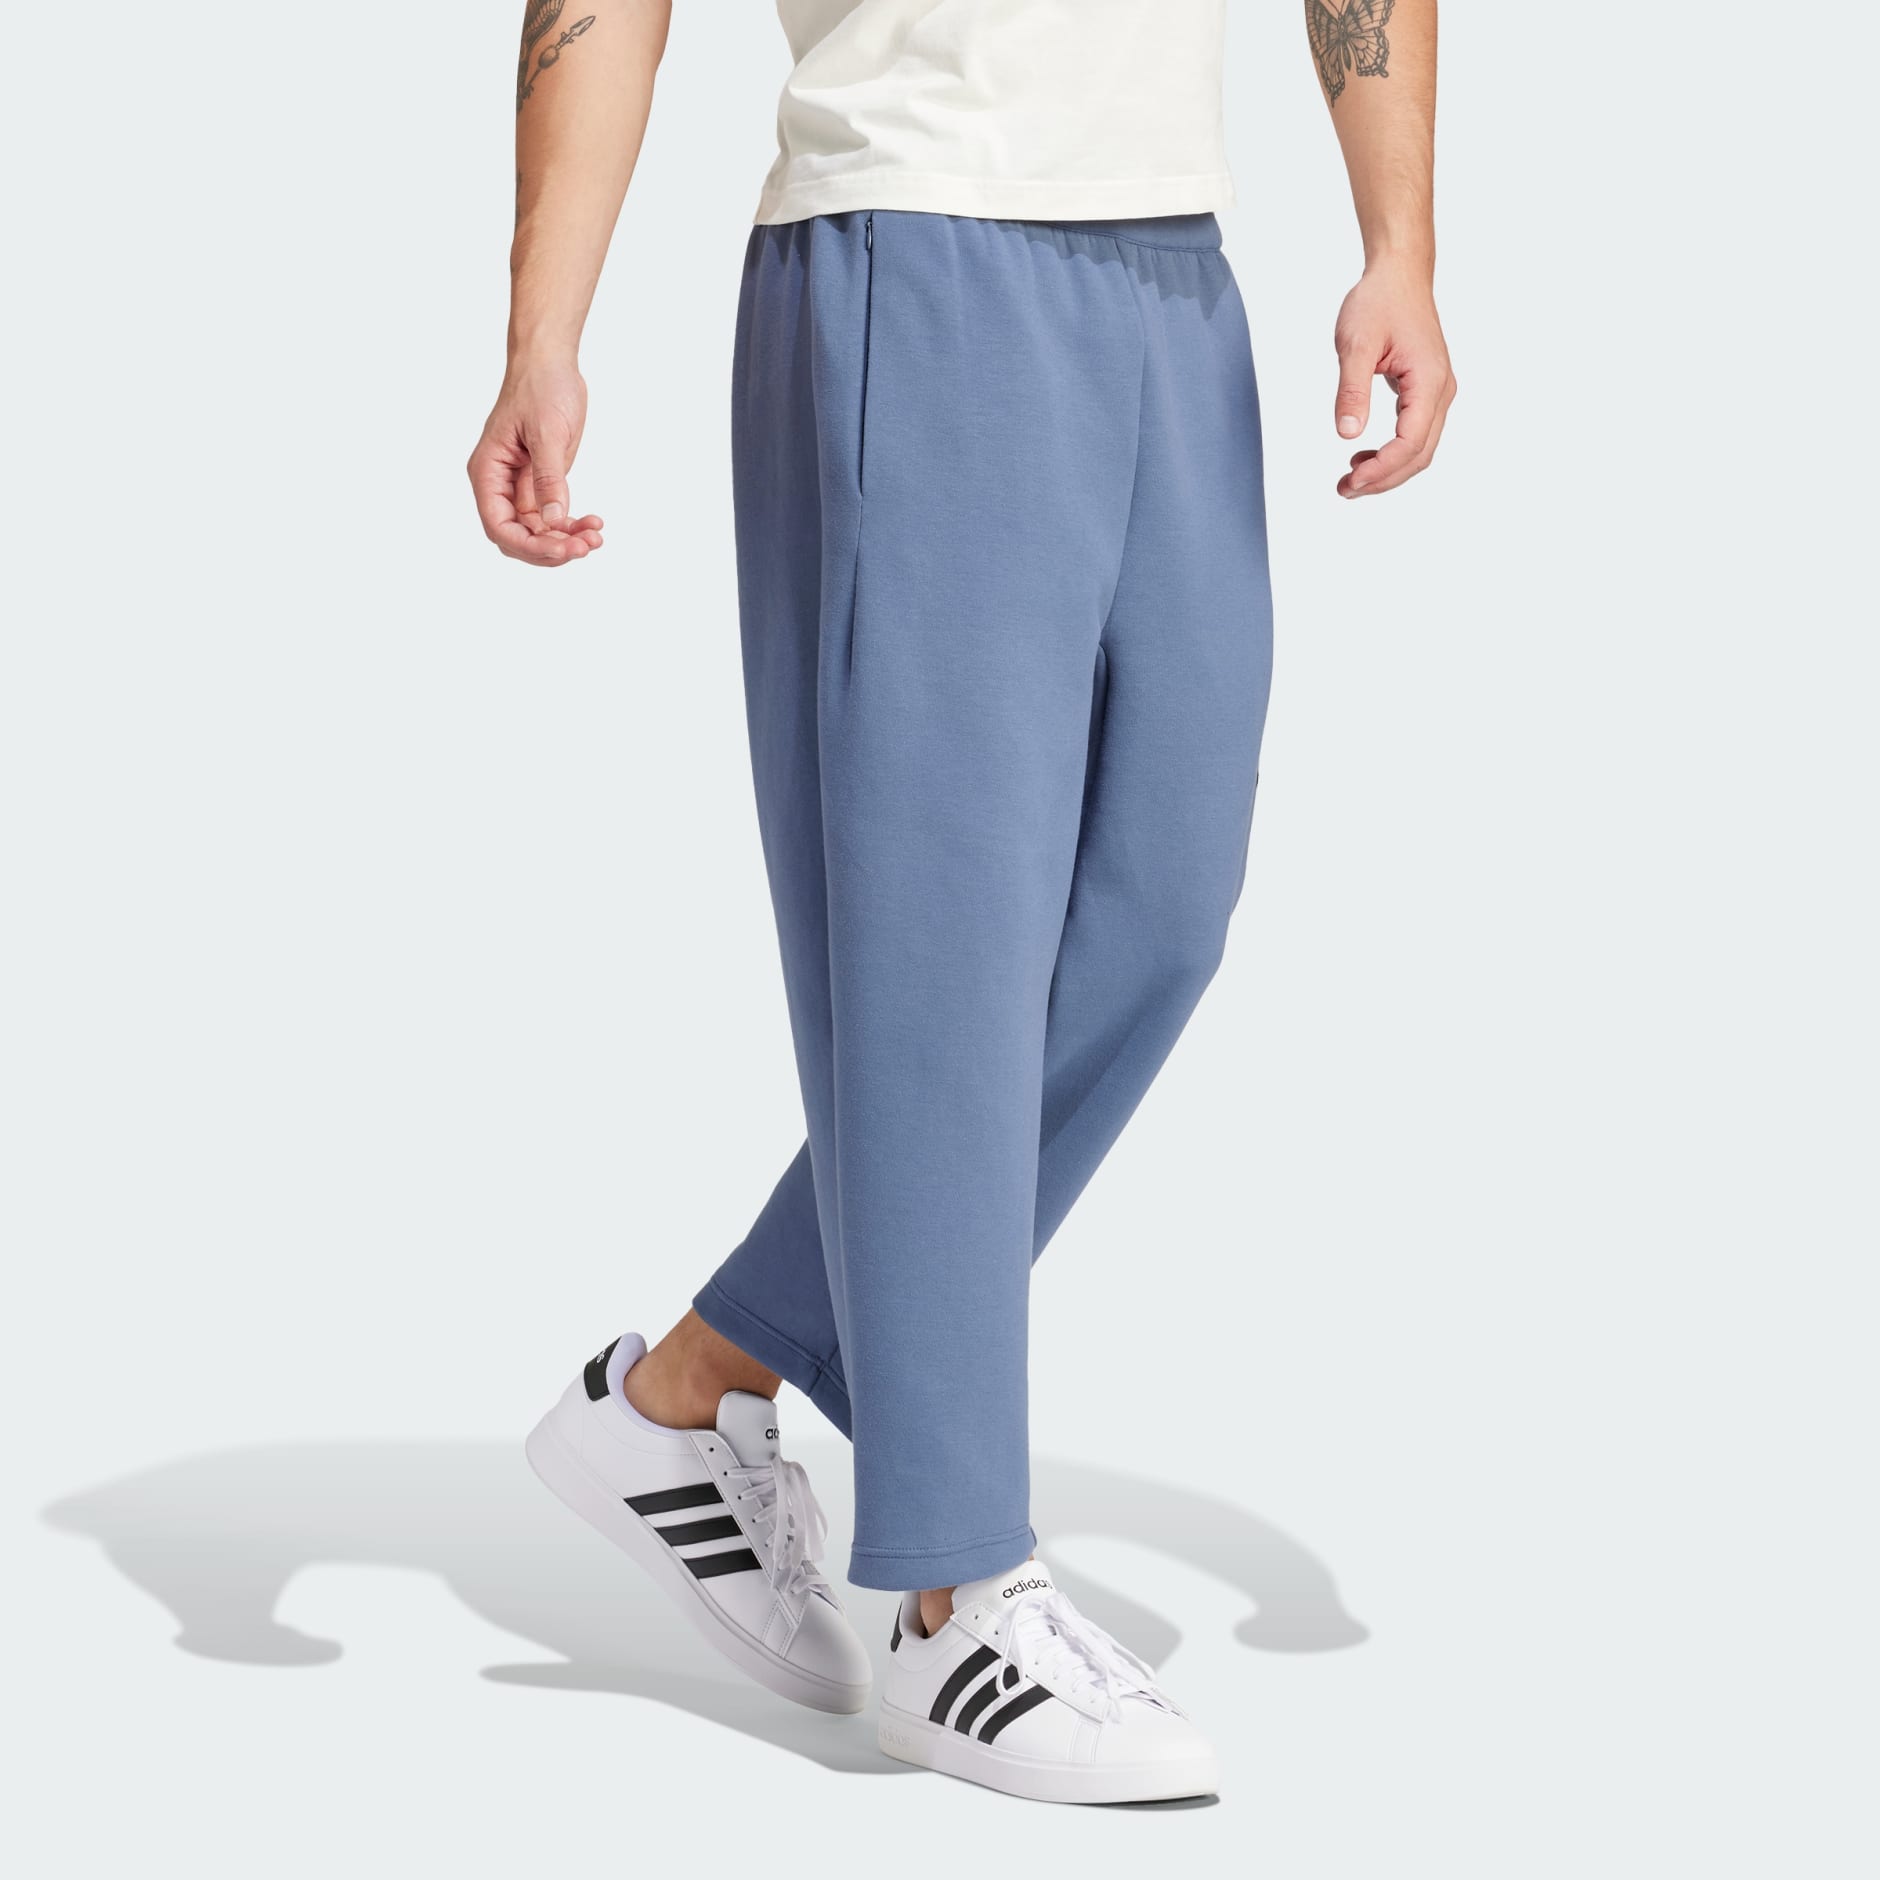 Men's Clothing - Z.N.E. 7/8 Pants - Blue | adidas Saudi Arabia